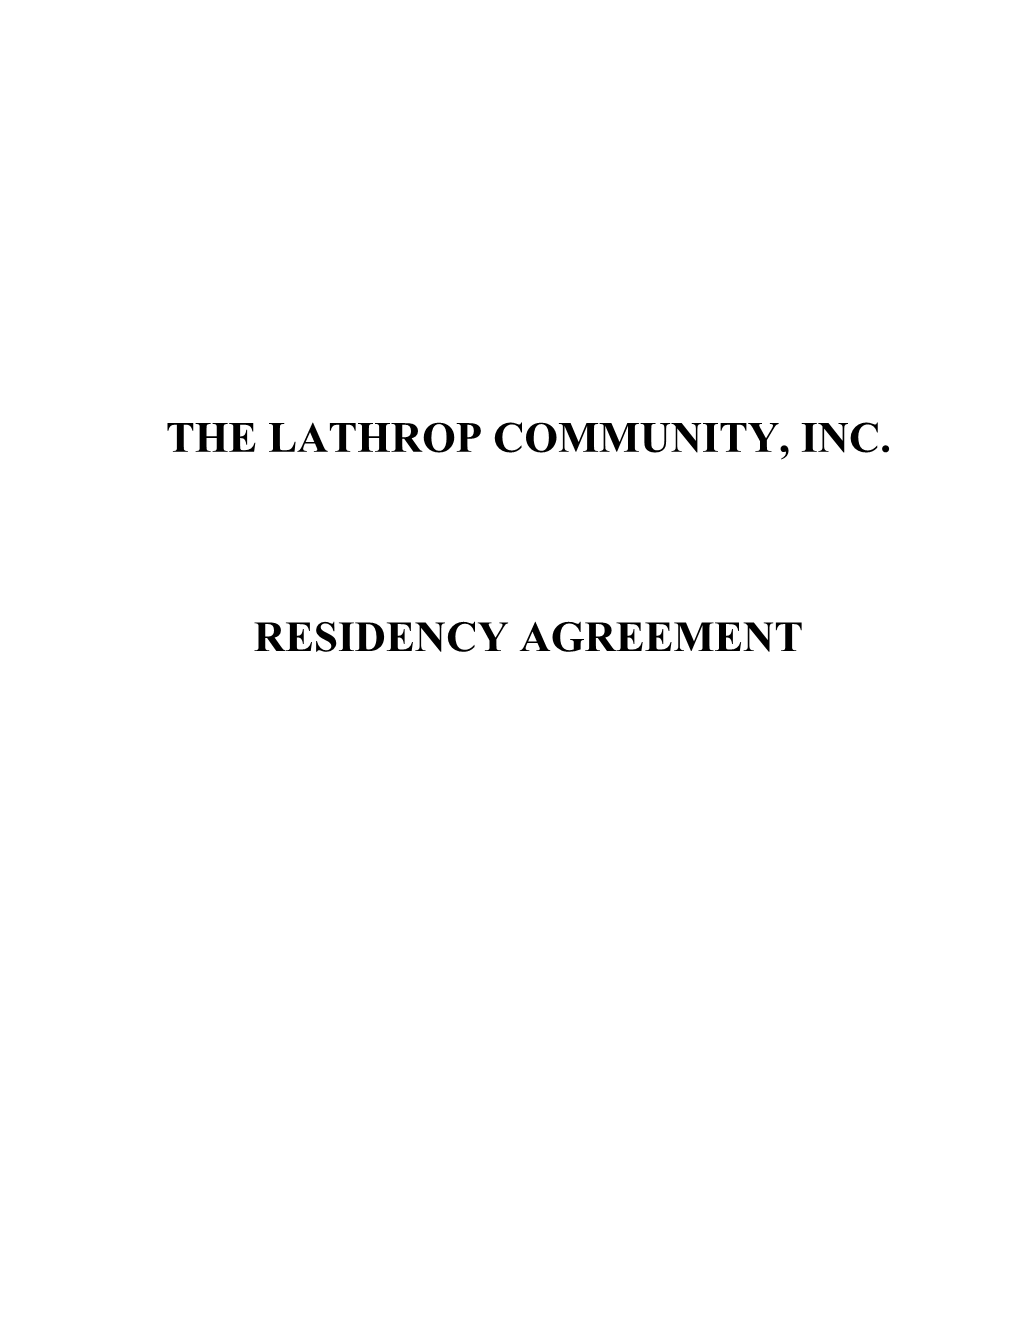 The Lathrop Community, Inc